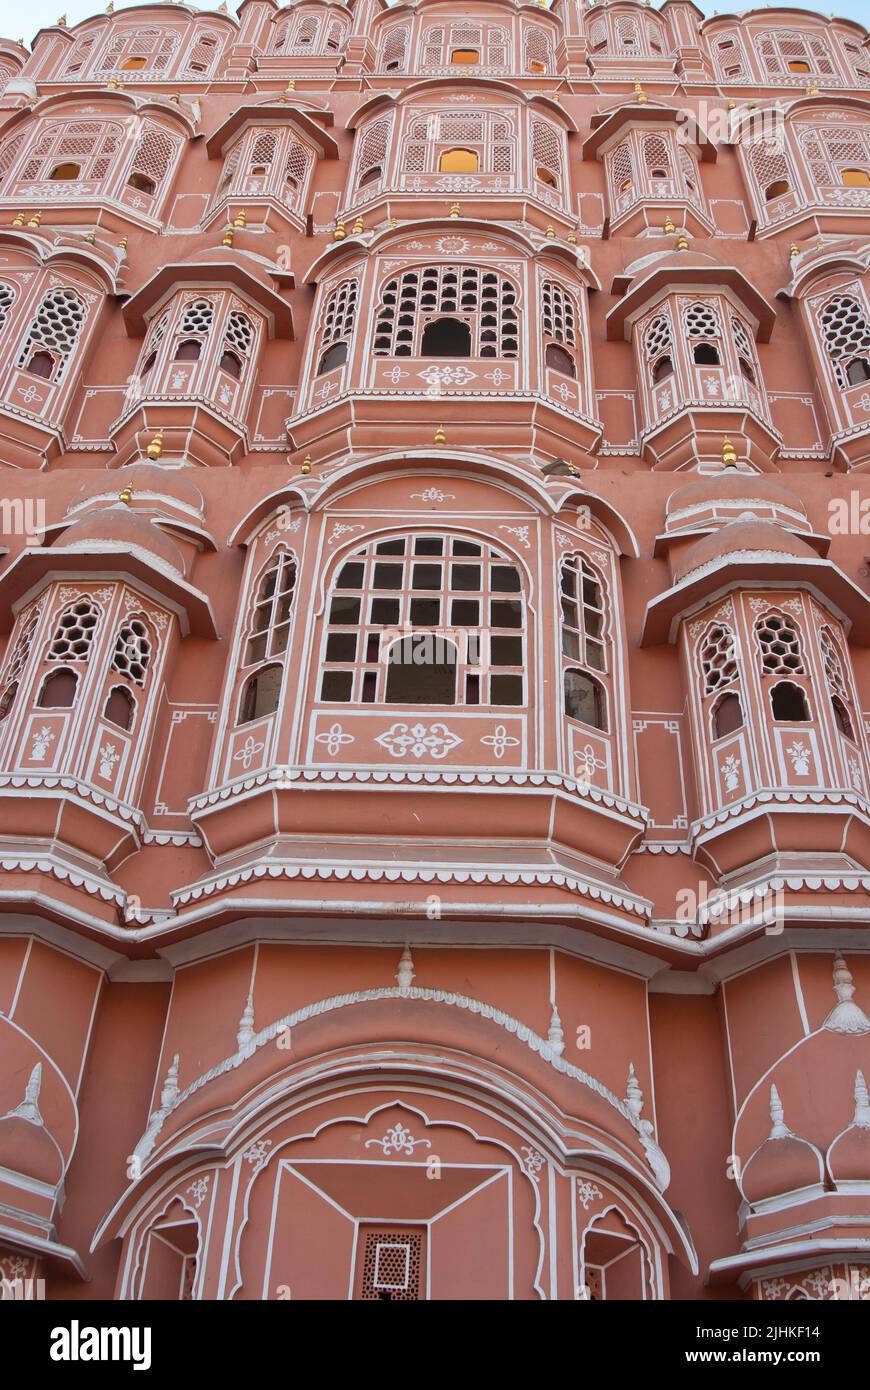 Palace of winds, Hawa Mahal - Jaipur, Rajastan, India. Stock Photo